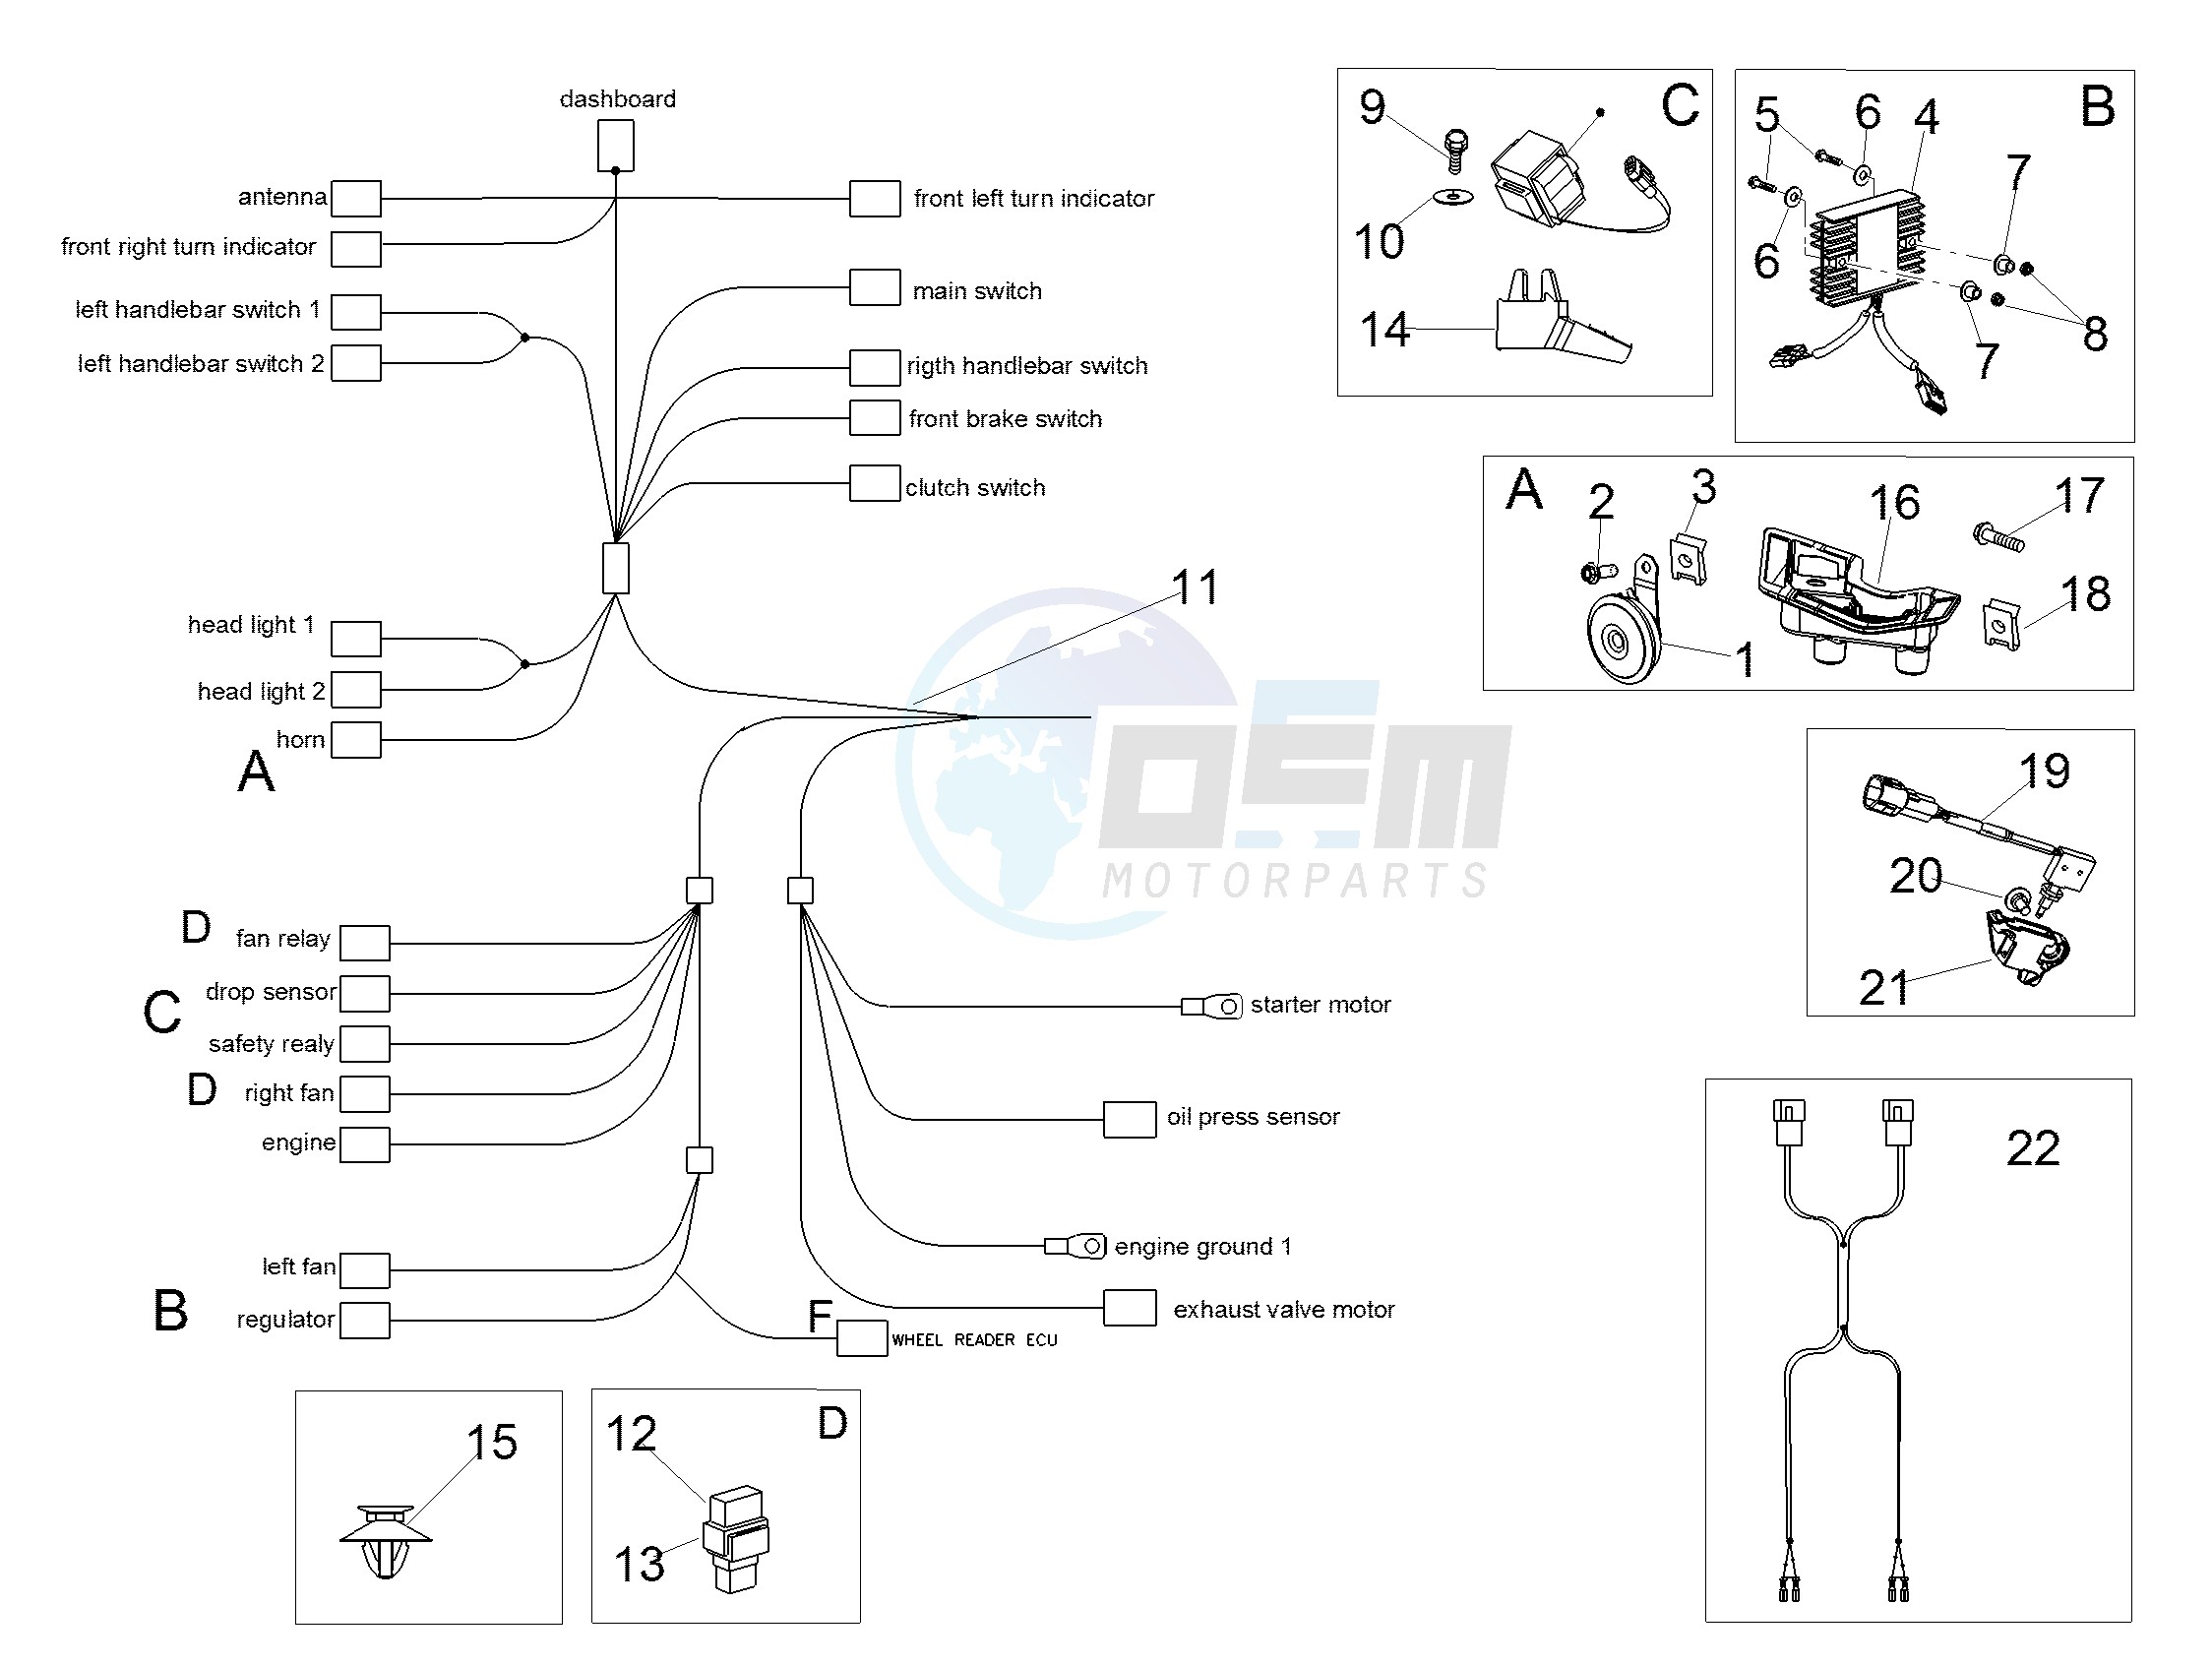 Electrical system I blueprint